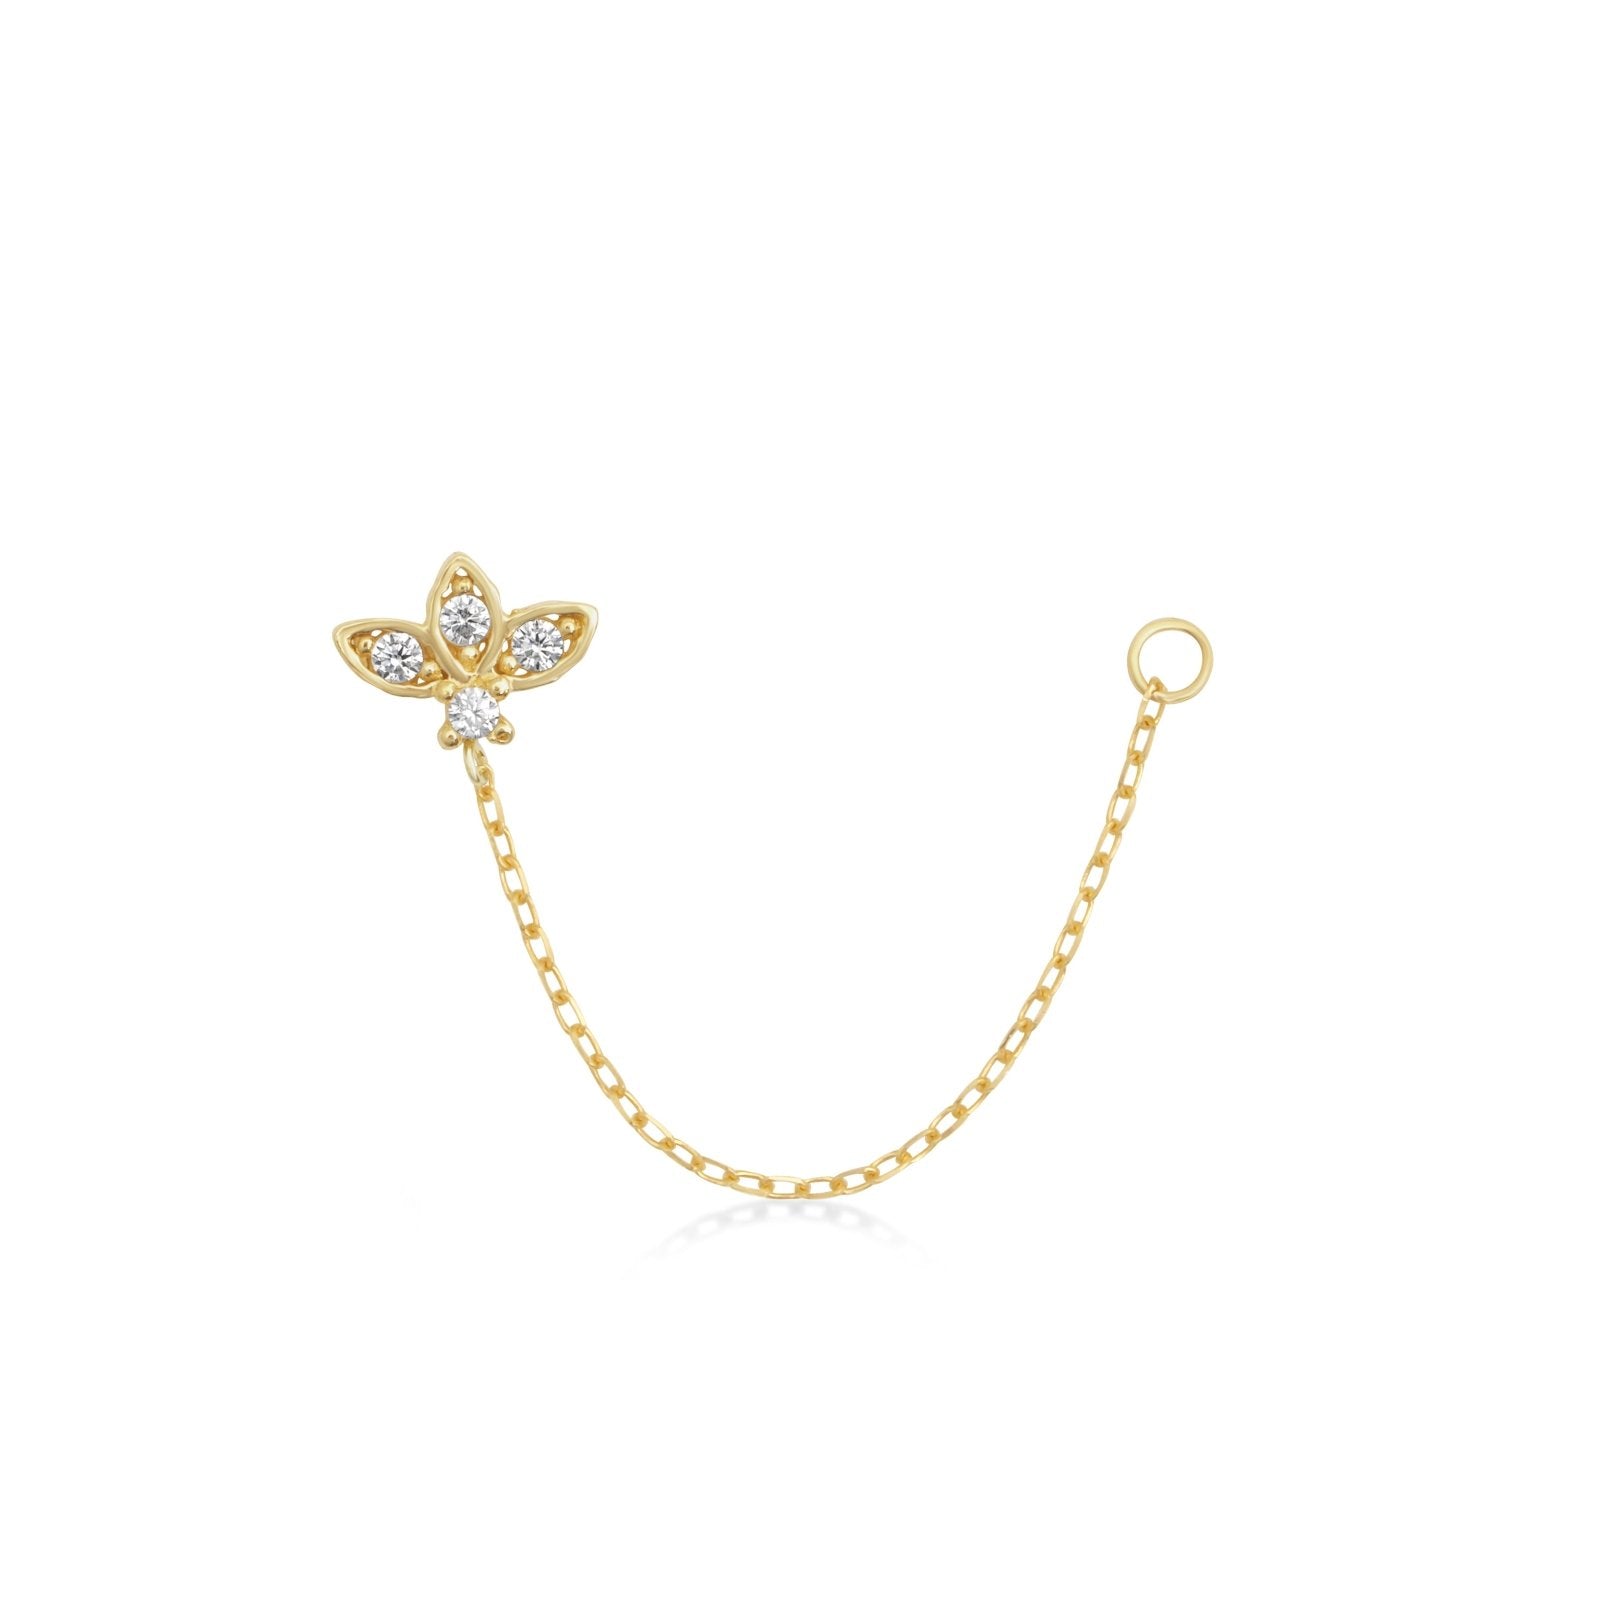 Studded Lotus Chain Earring Earrings Estella Collection #product_description# 14k Chain Earrings Dangle Earrings #tag4# #tag5# #tag6# #tag7# #tag8# #tag9# #tag10#